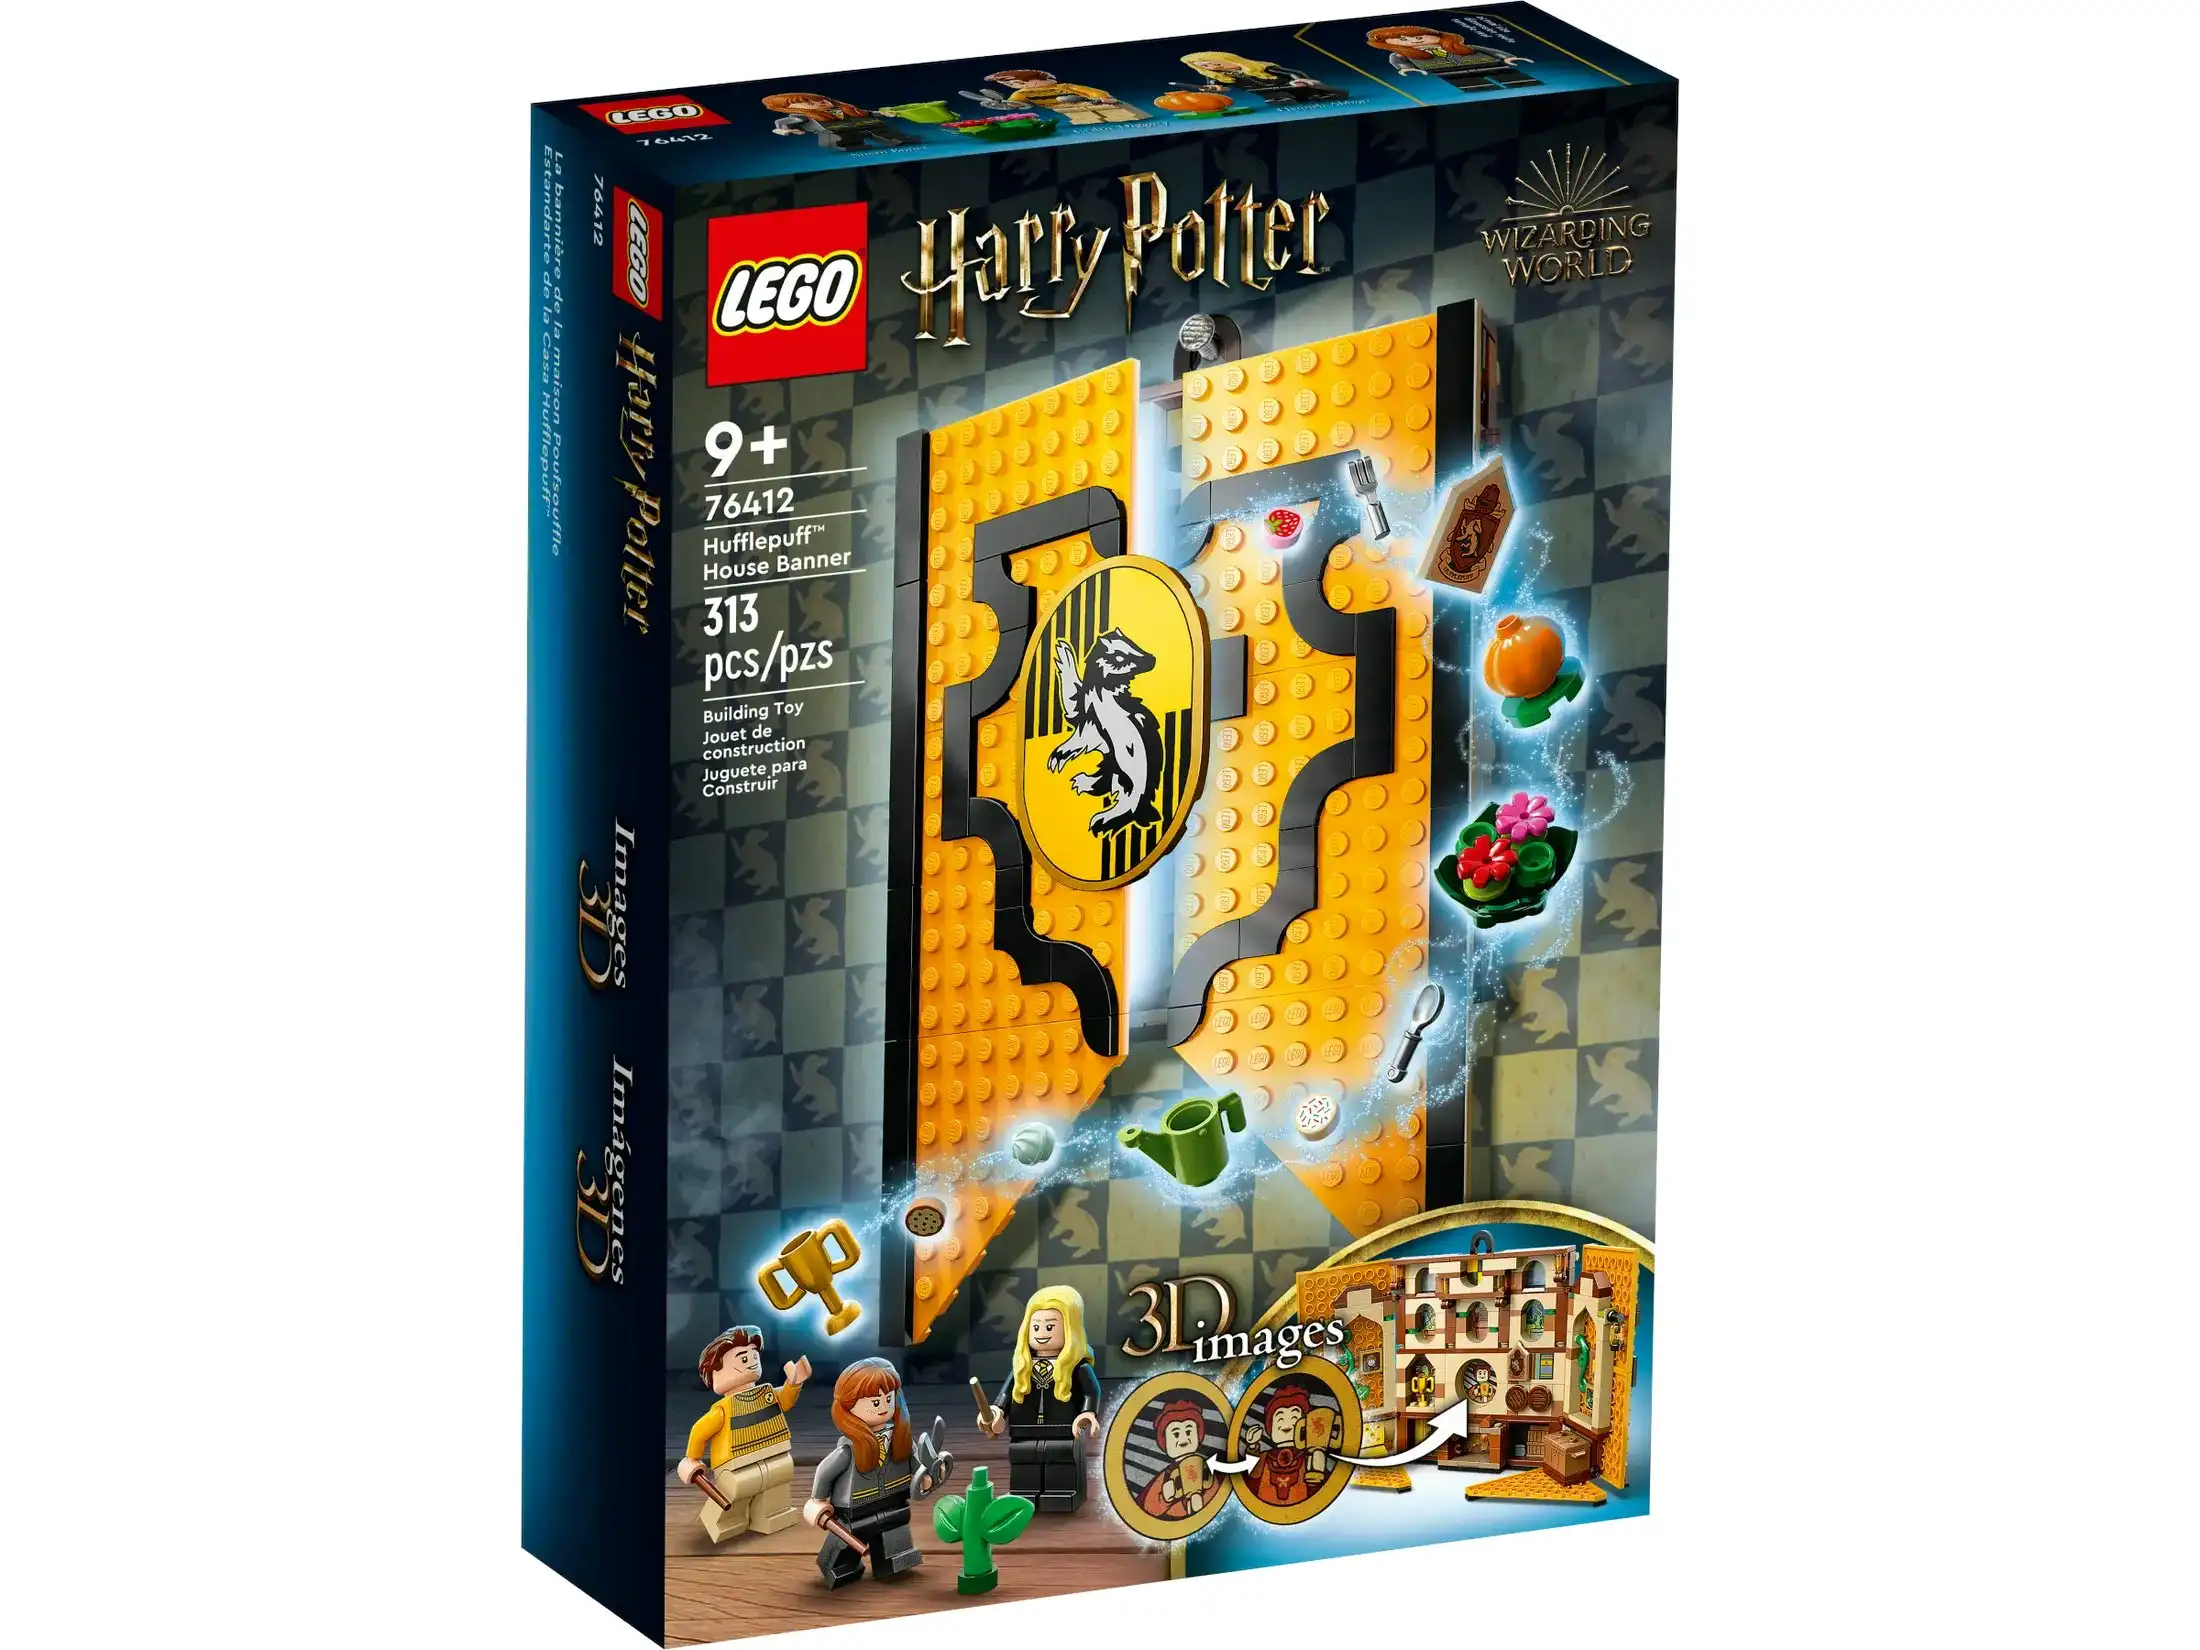 LEGO 76412 Hufflepuff House Banner - Harry Potter